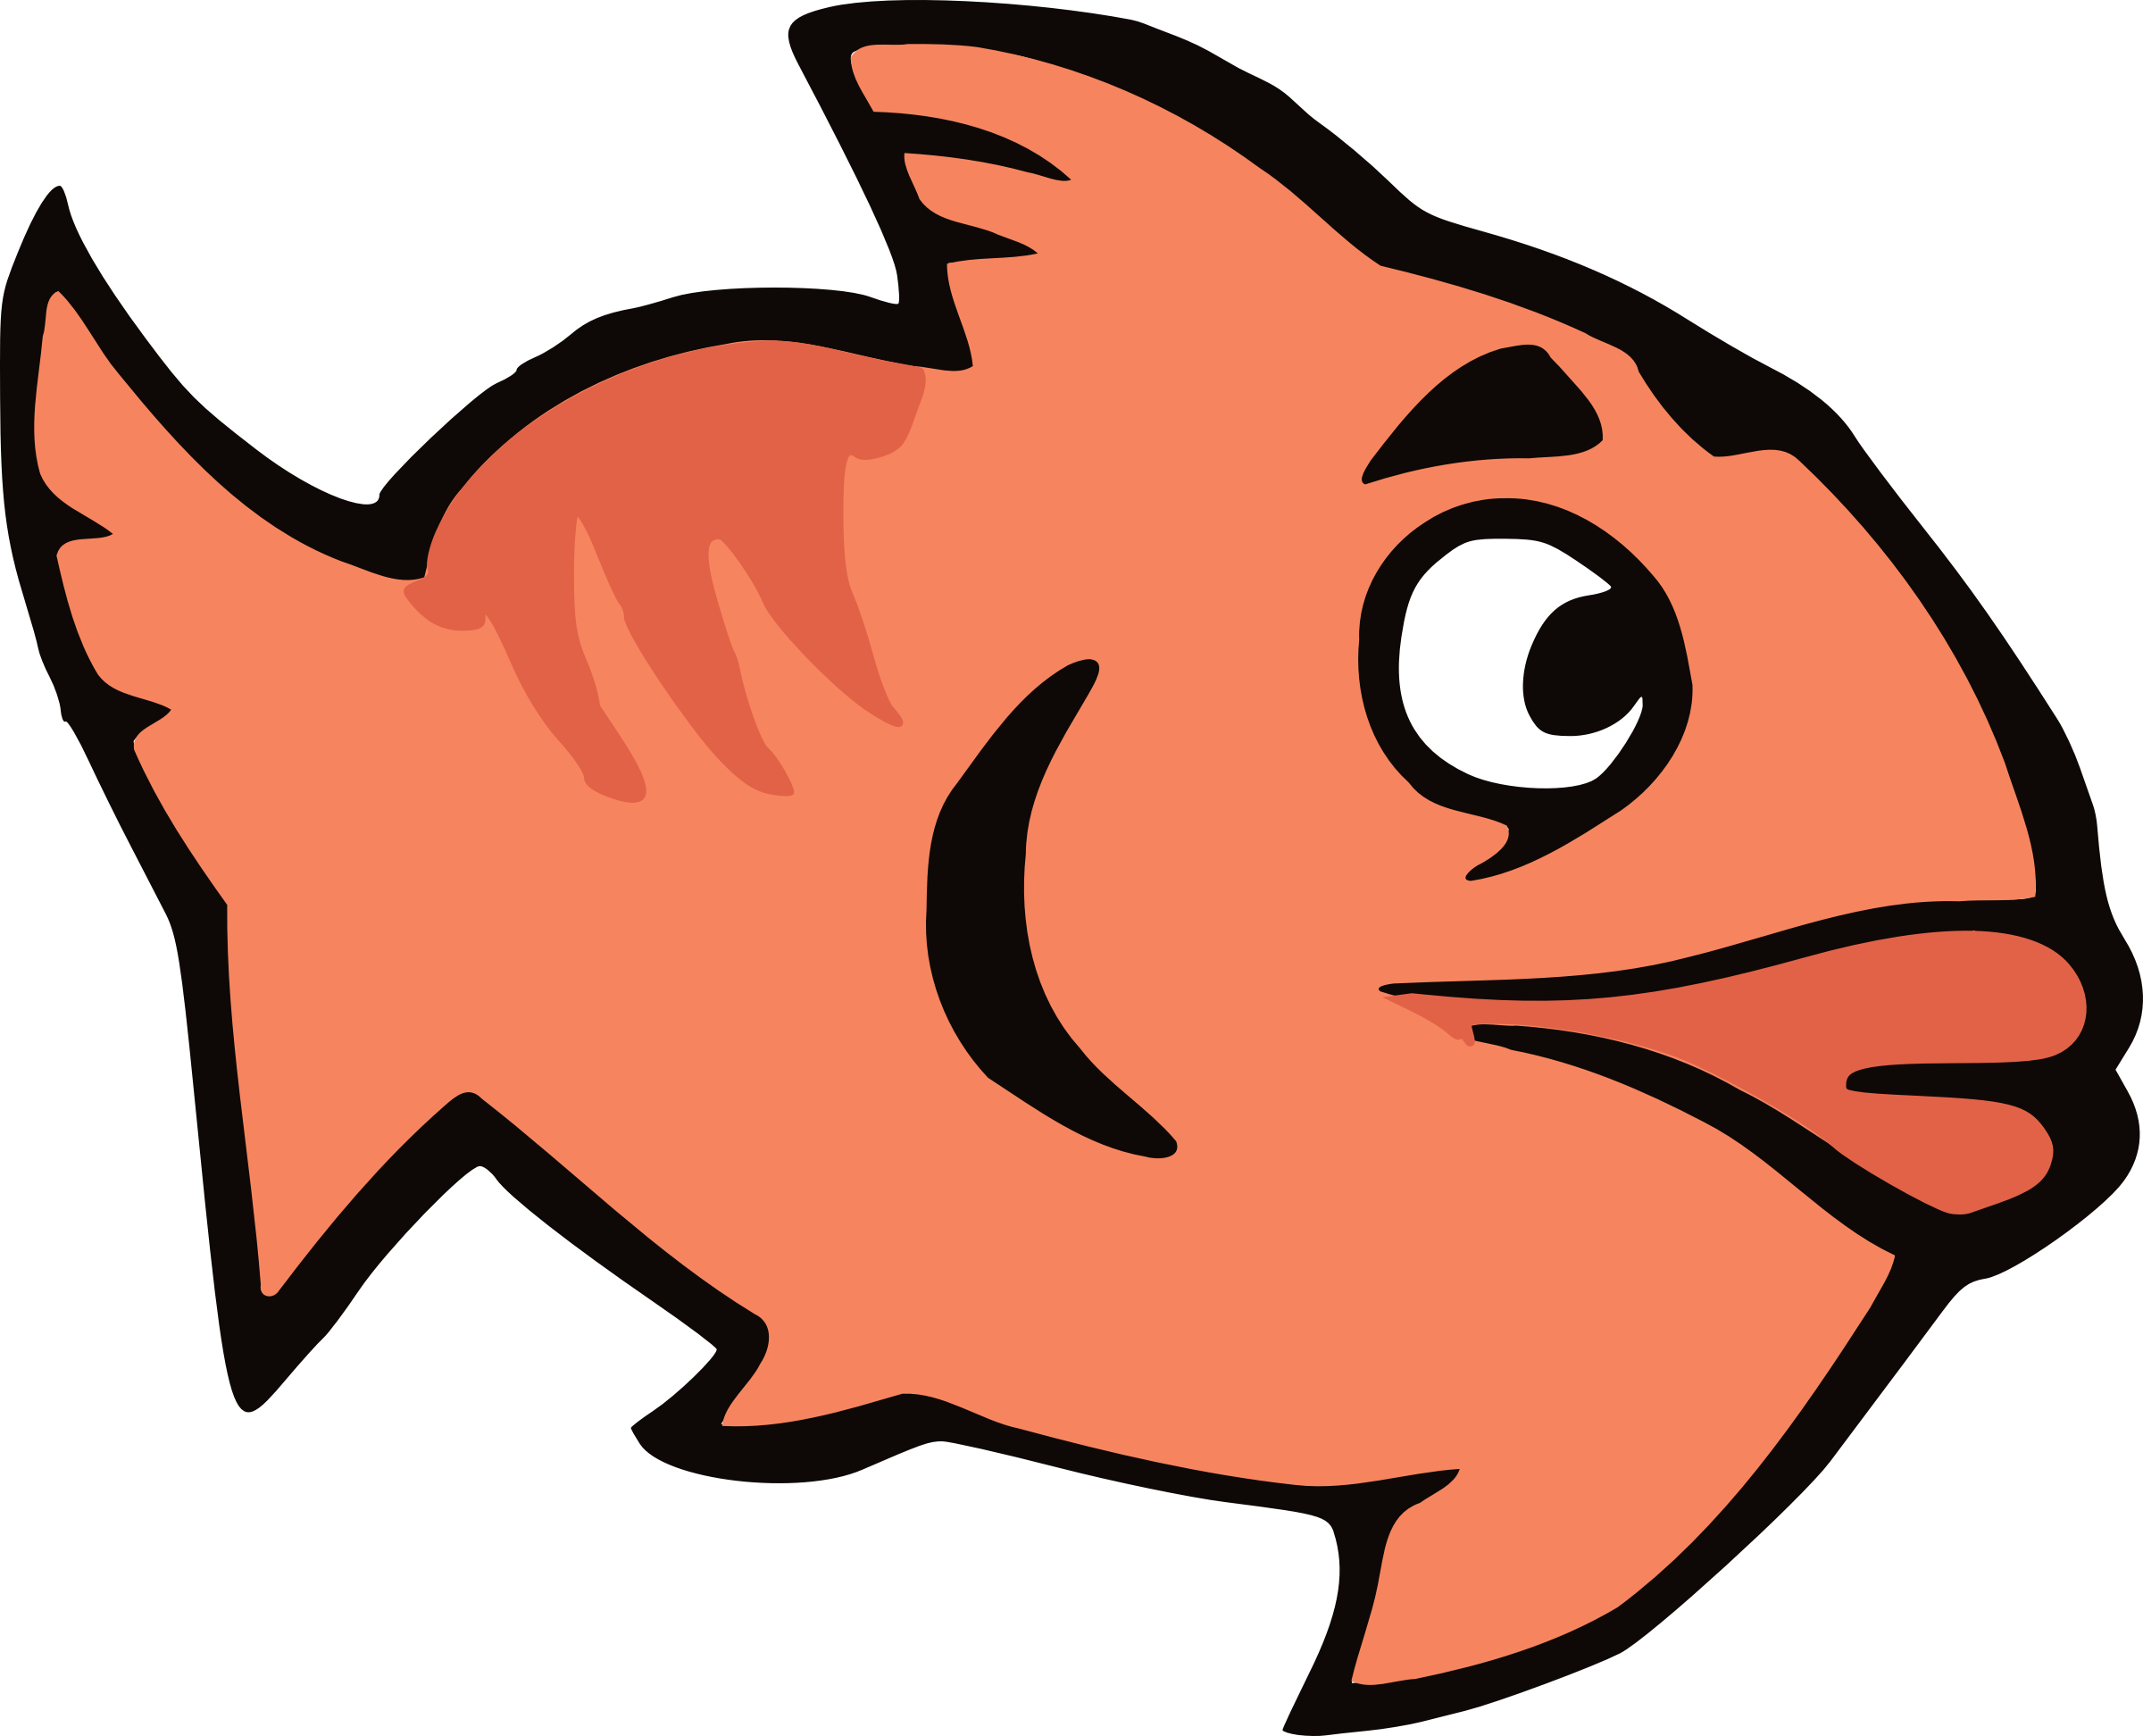 Download Cartoon Fish Vector Clipart image - Free stock photo - Public Domain photo - CC0 Images